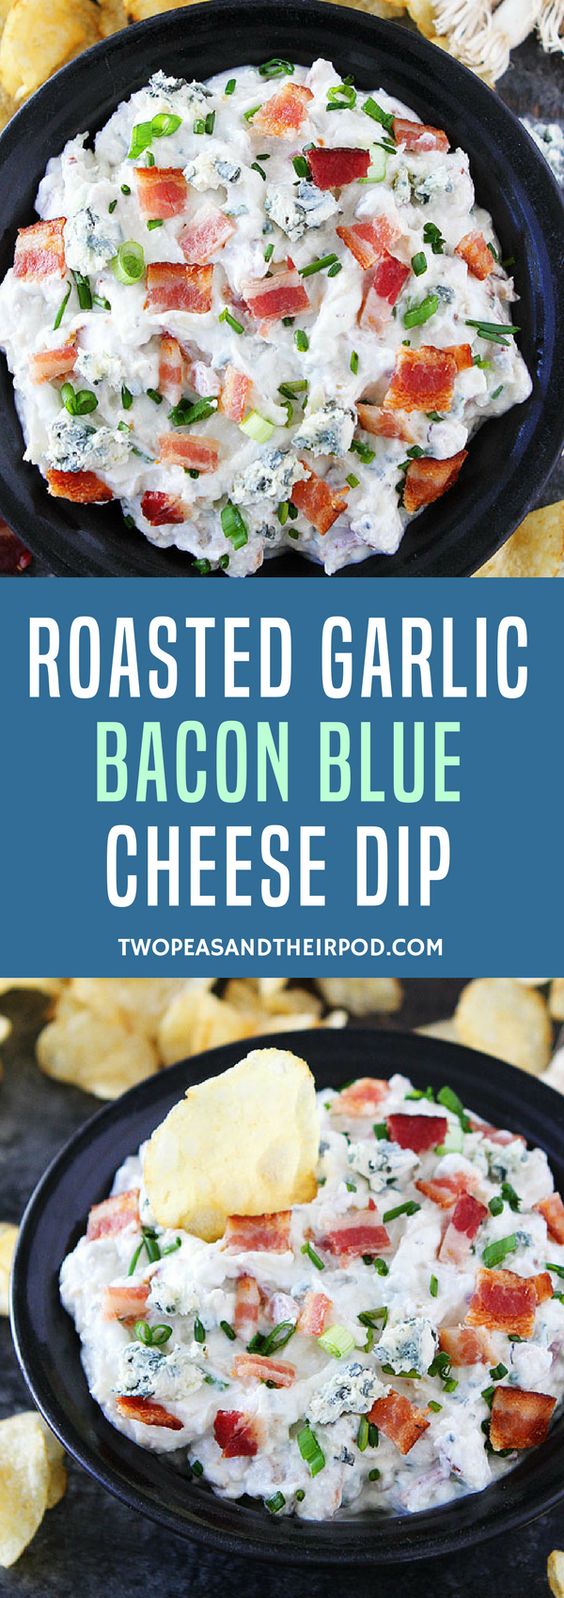 Roasted Garlic Bacon Blue Cheese Dip